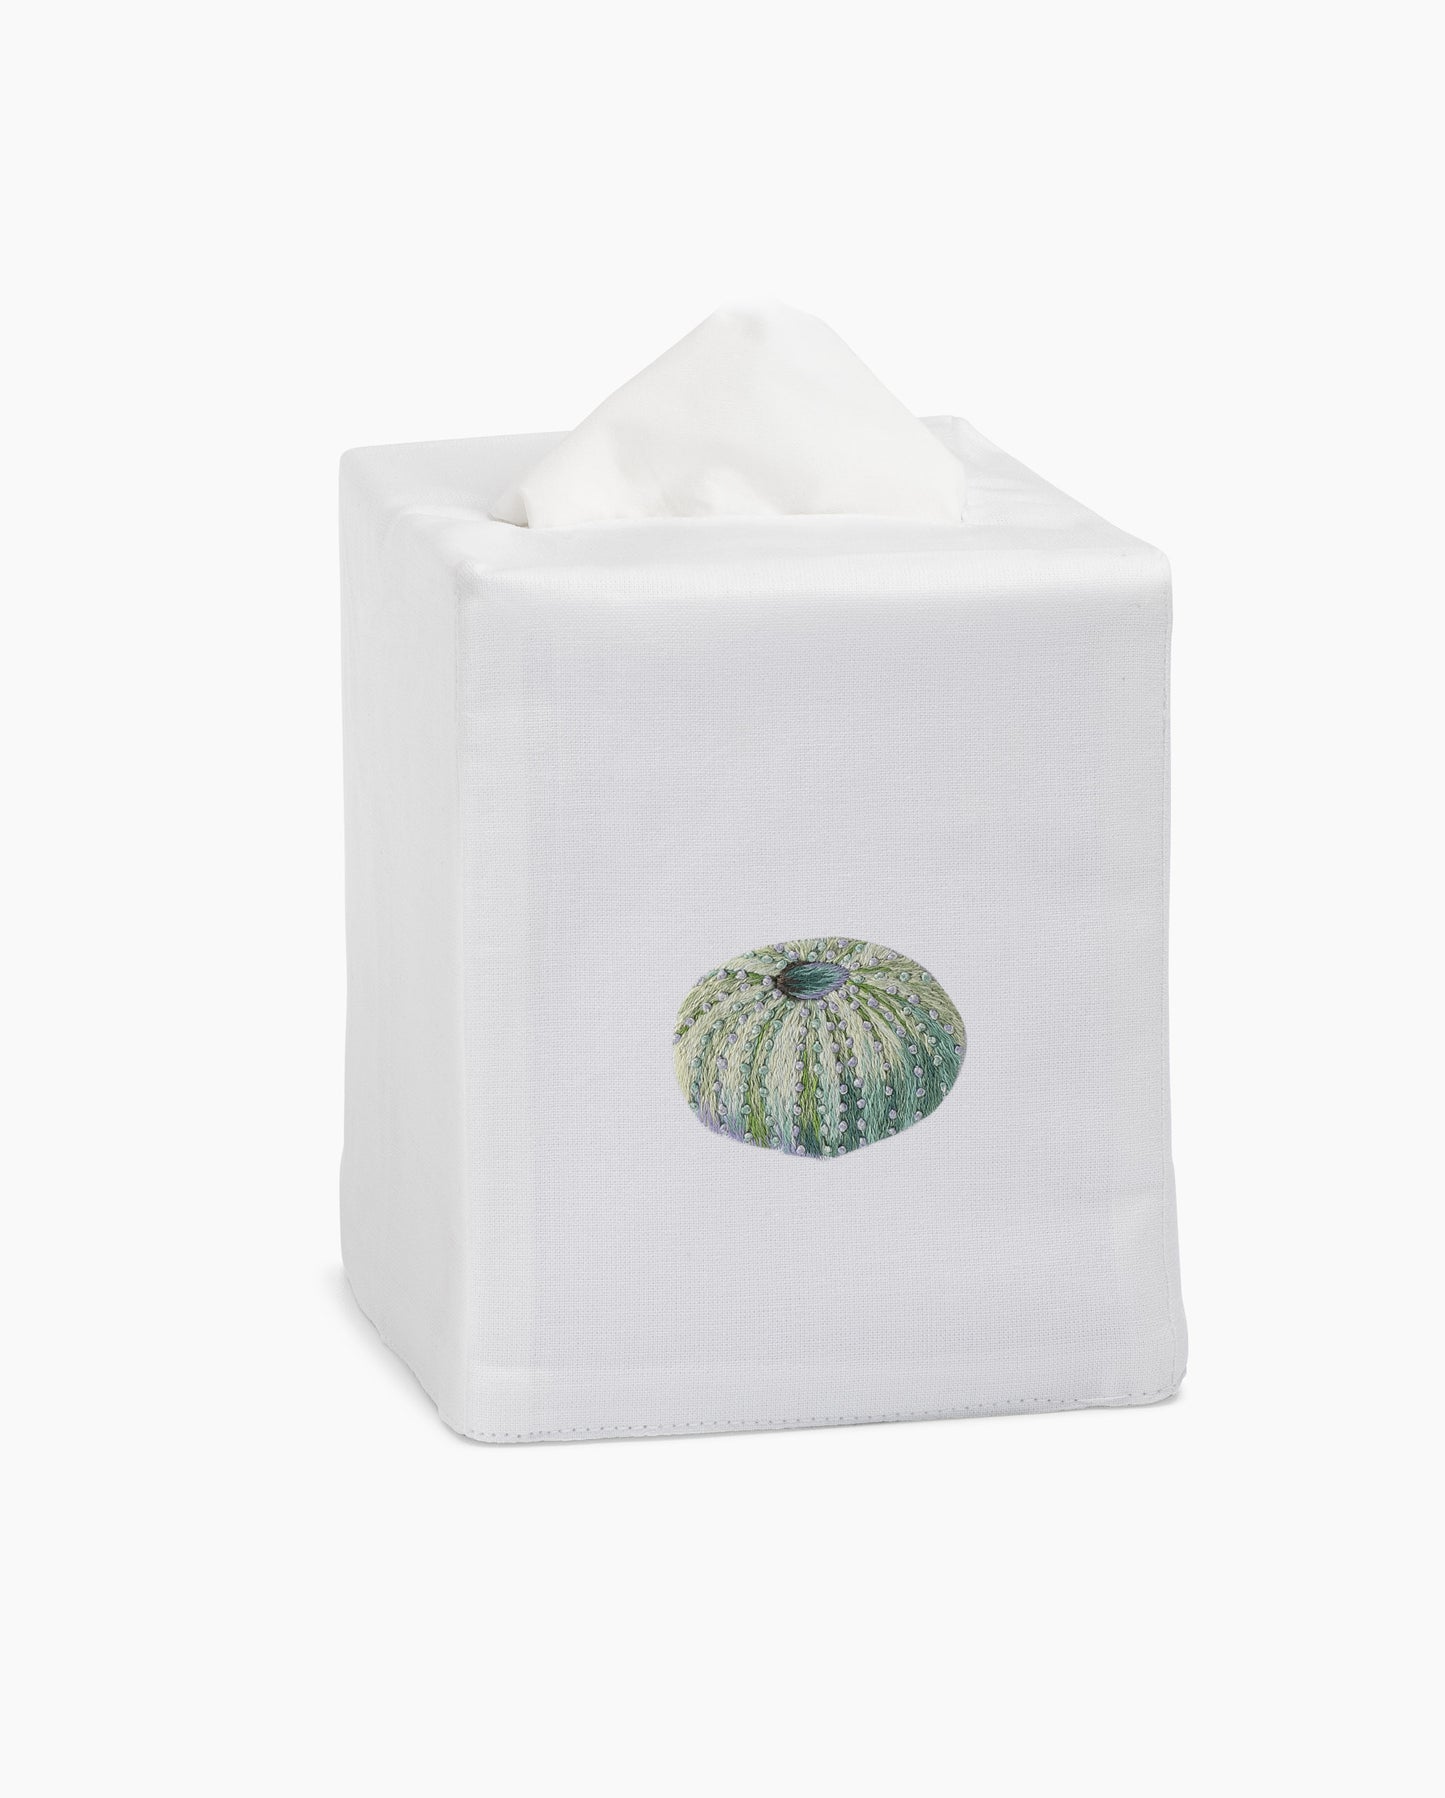 Urchin Teal Tissue Box Cover